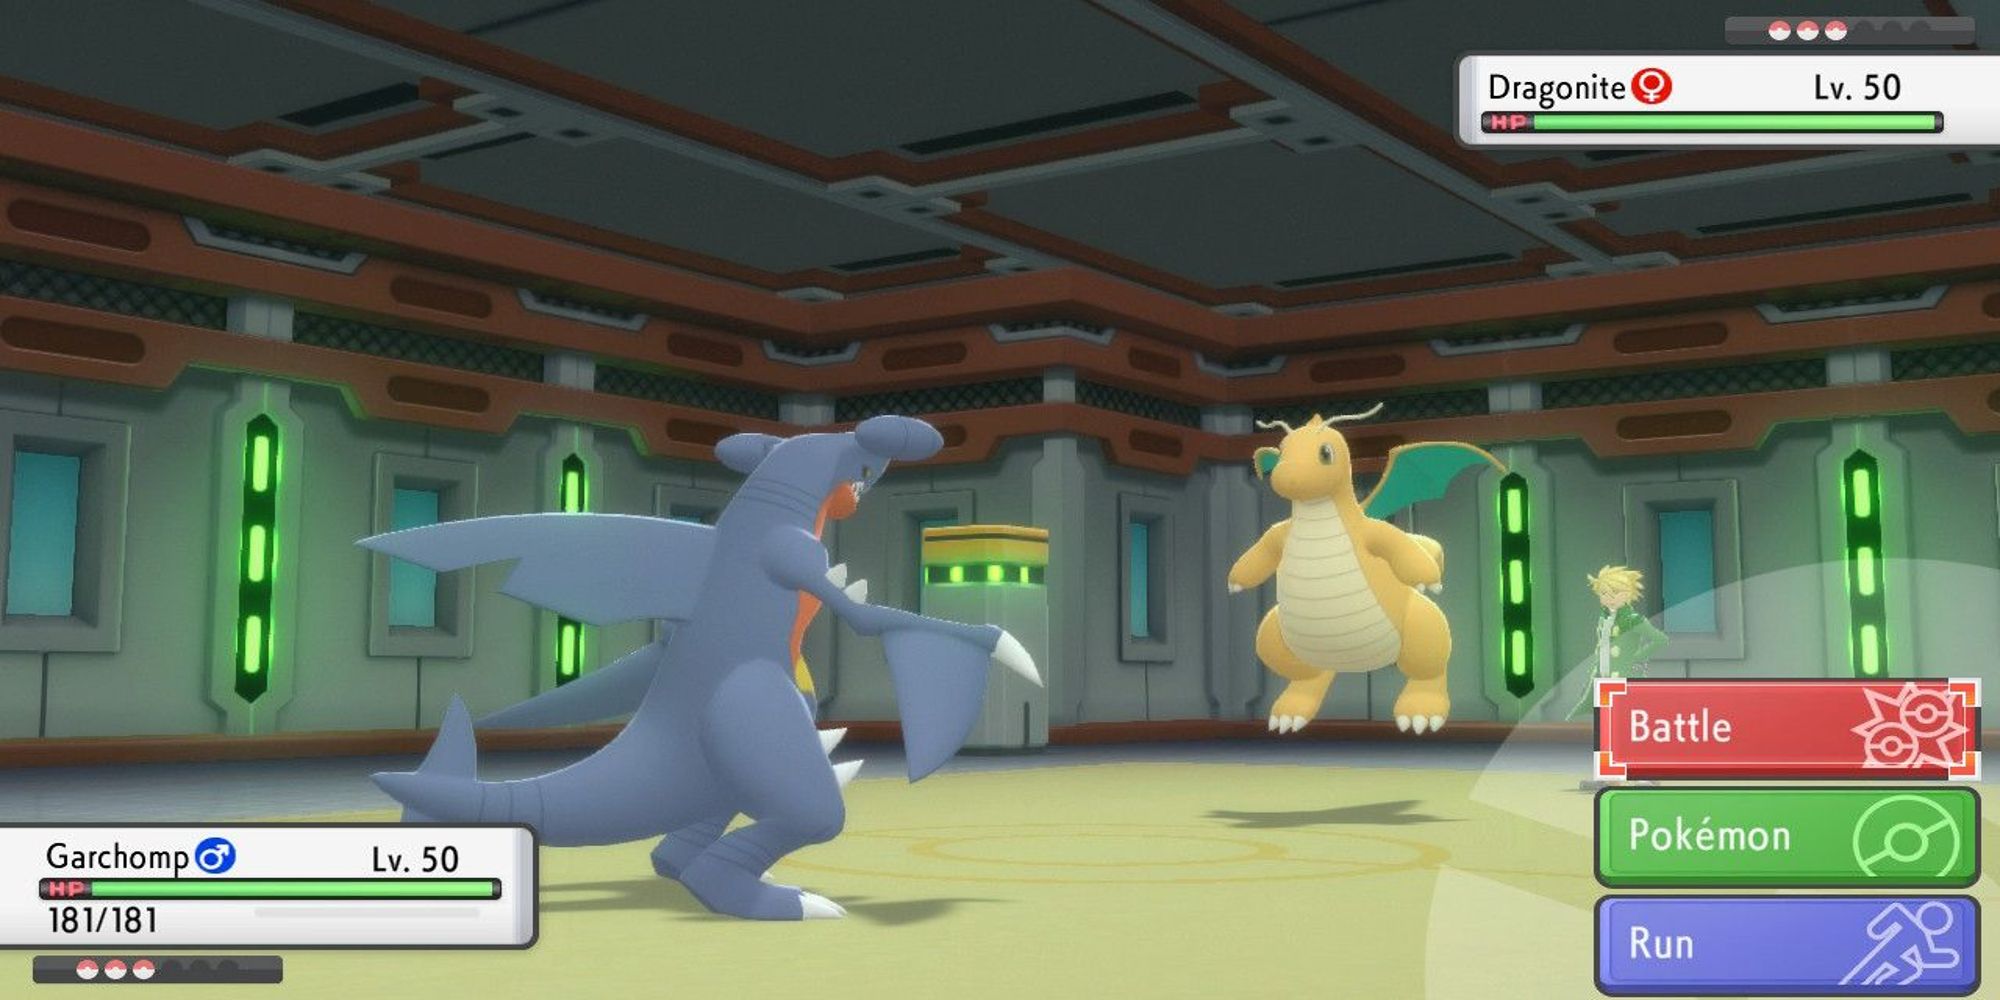 Dragonite fights Garchomp in the Battle Tower in Pokémon BDSP